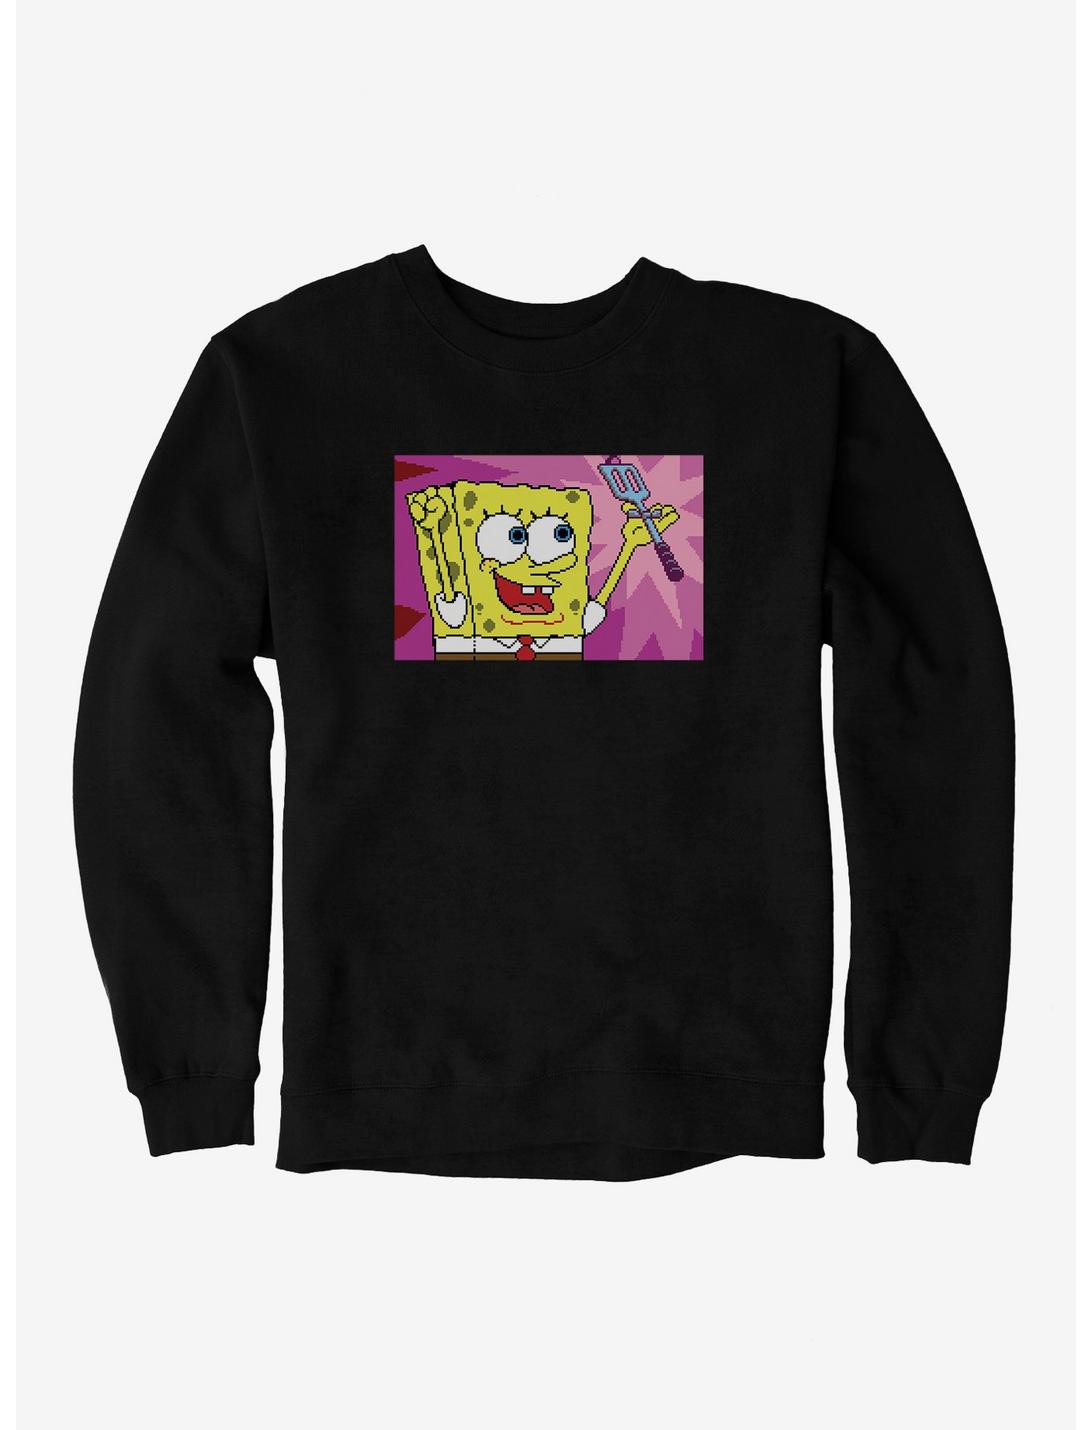 SpongeBob SquarePants Achieved Lost Spatula Sweatshirt, , hi-res